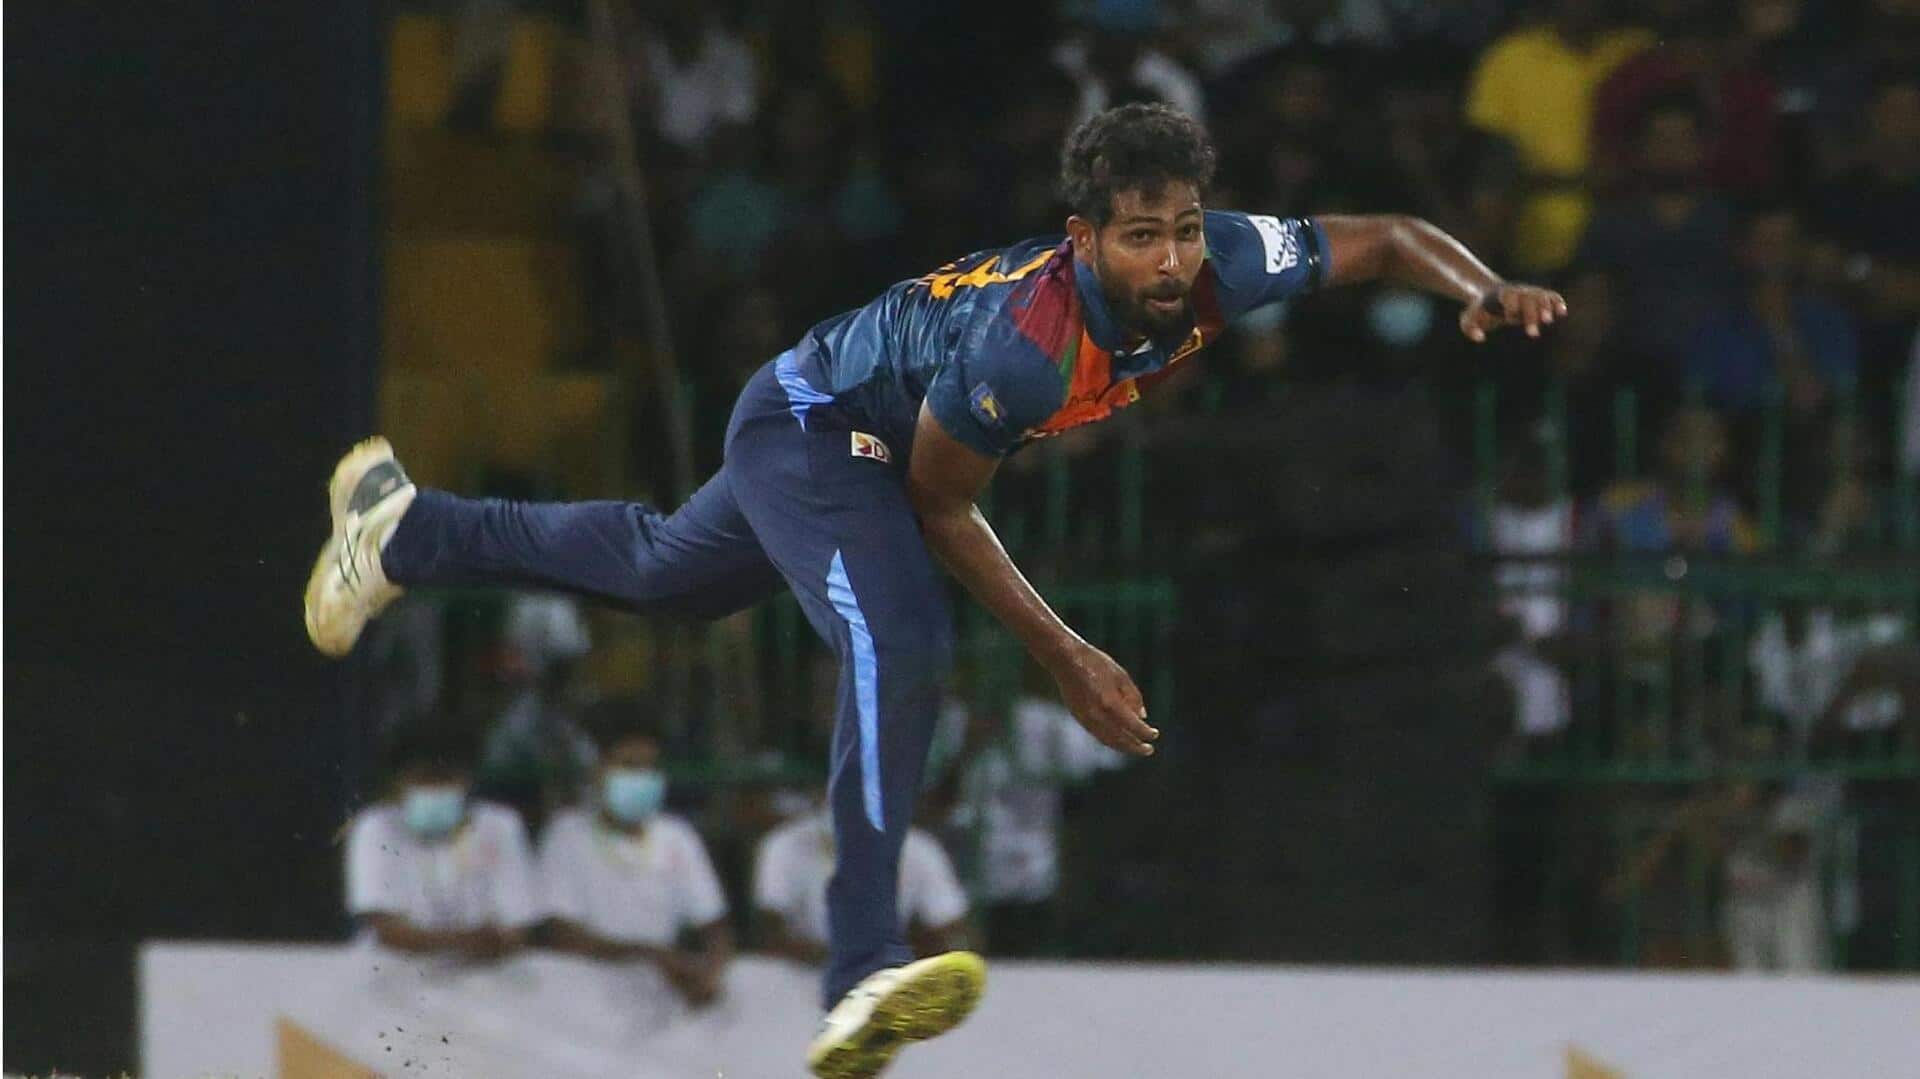 SL's Nuwan Thushara joins elite list with hat-trick versus Bangladesh